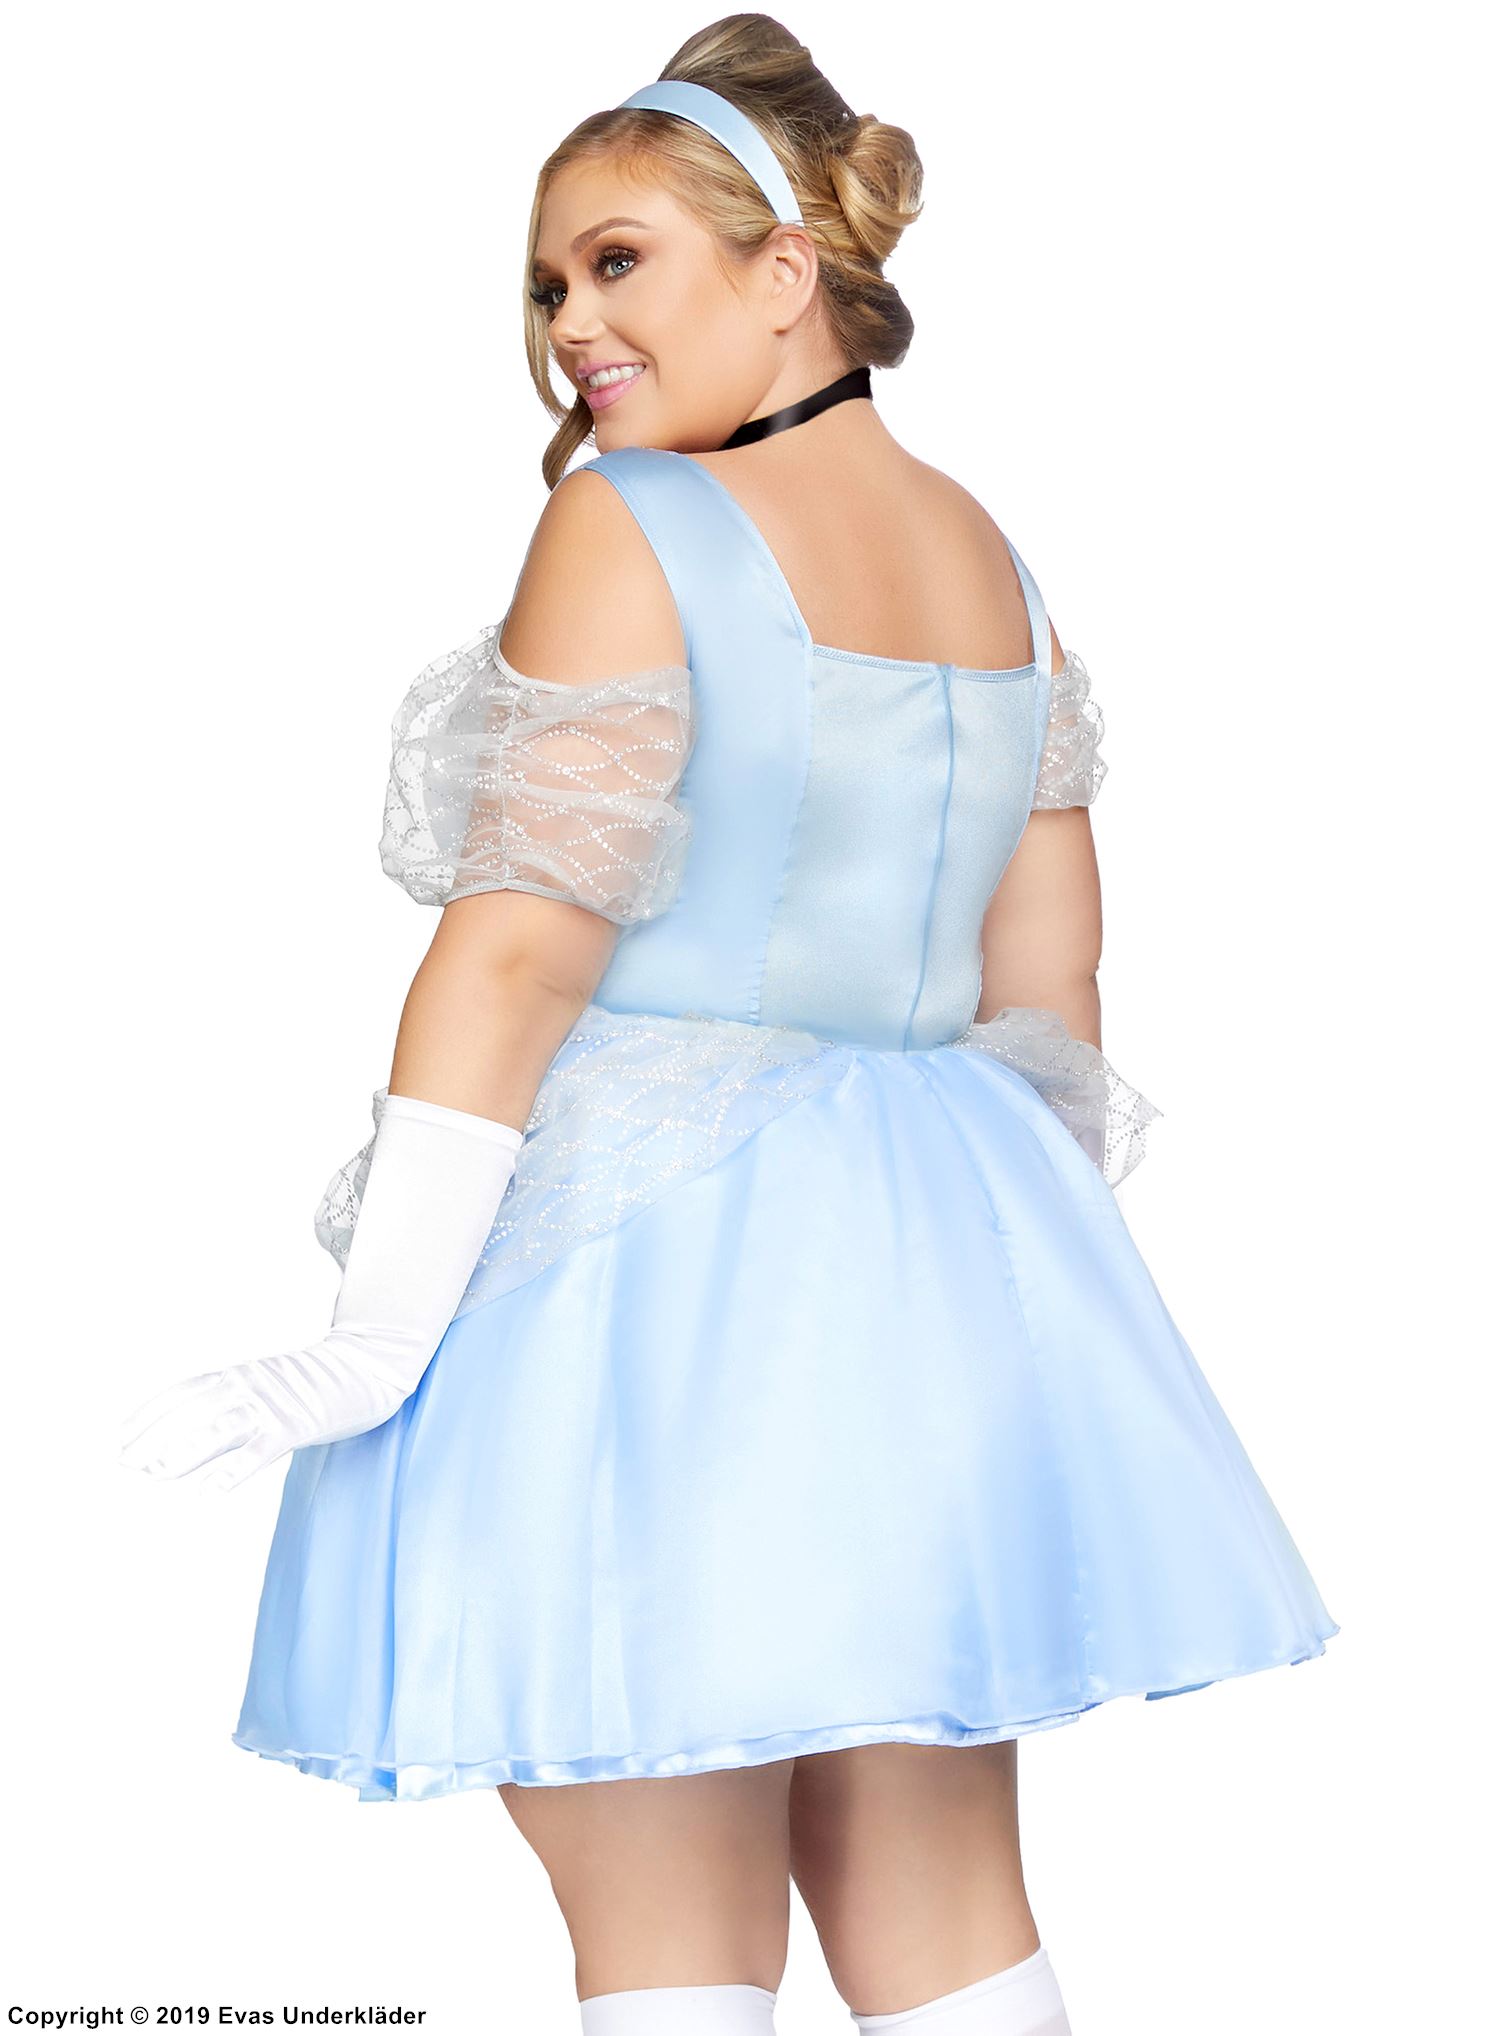 Cinderella, costume dress, rhinestones, lace overlay, cold shoulder, XL to 4XL